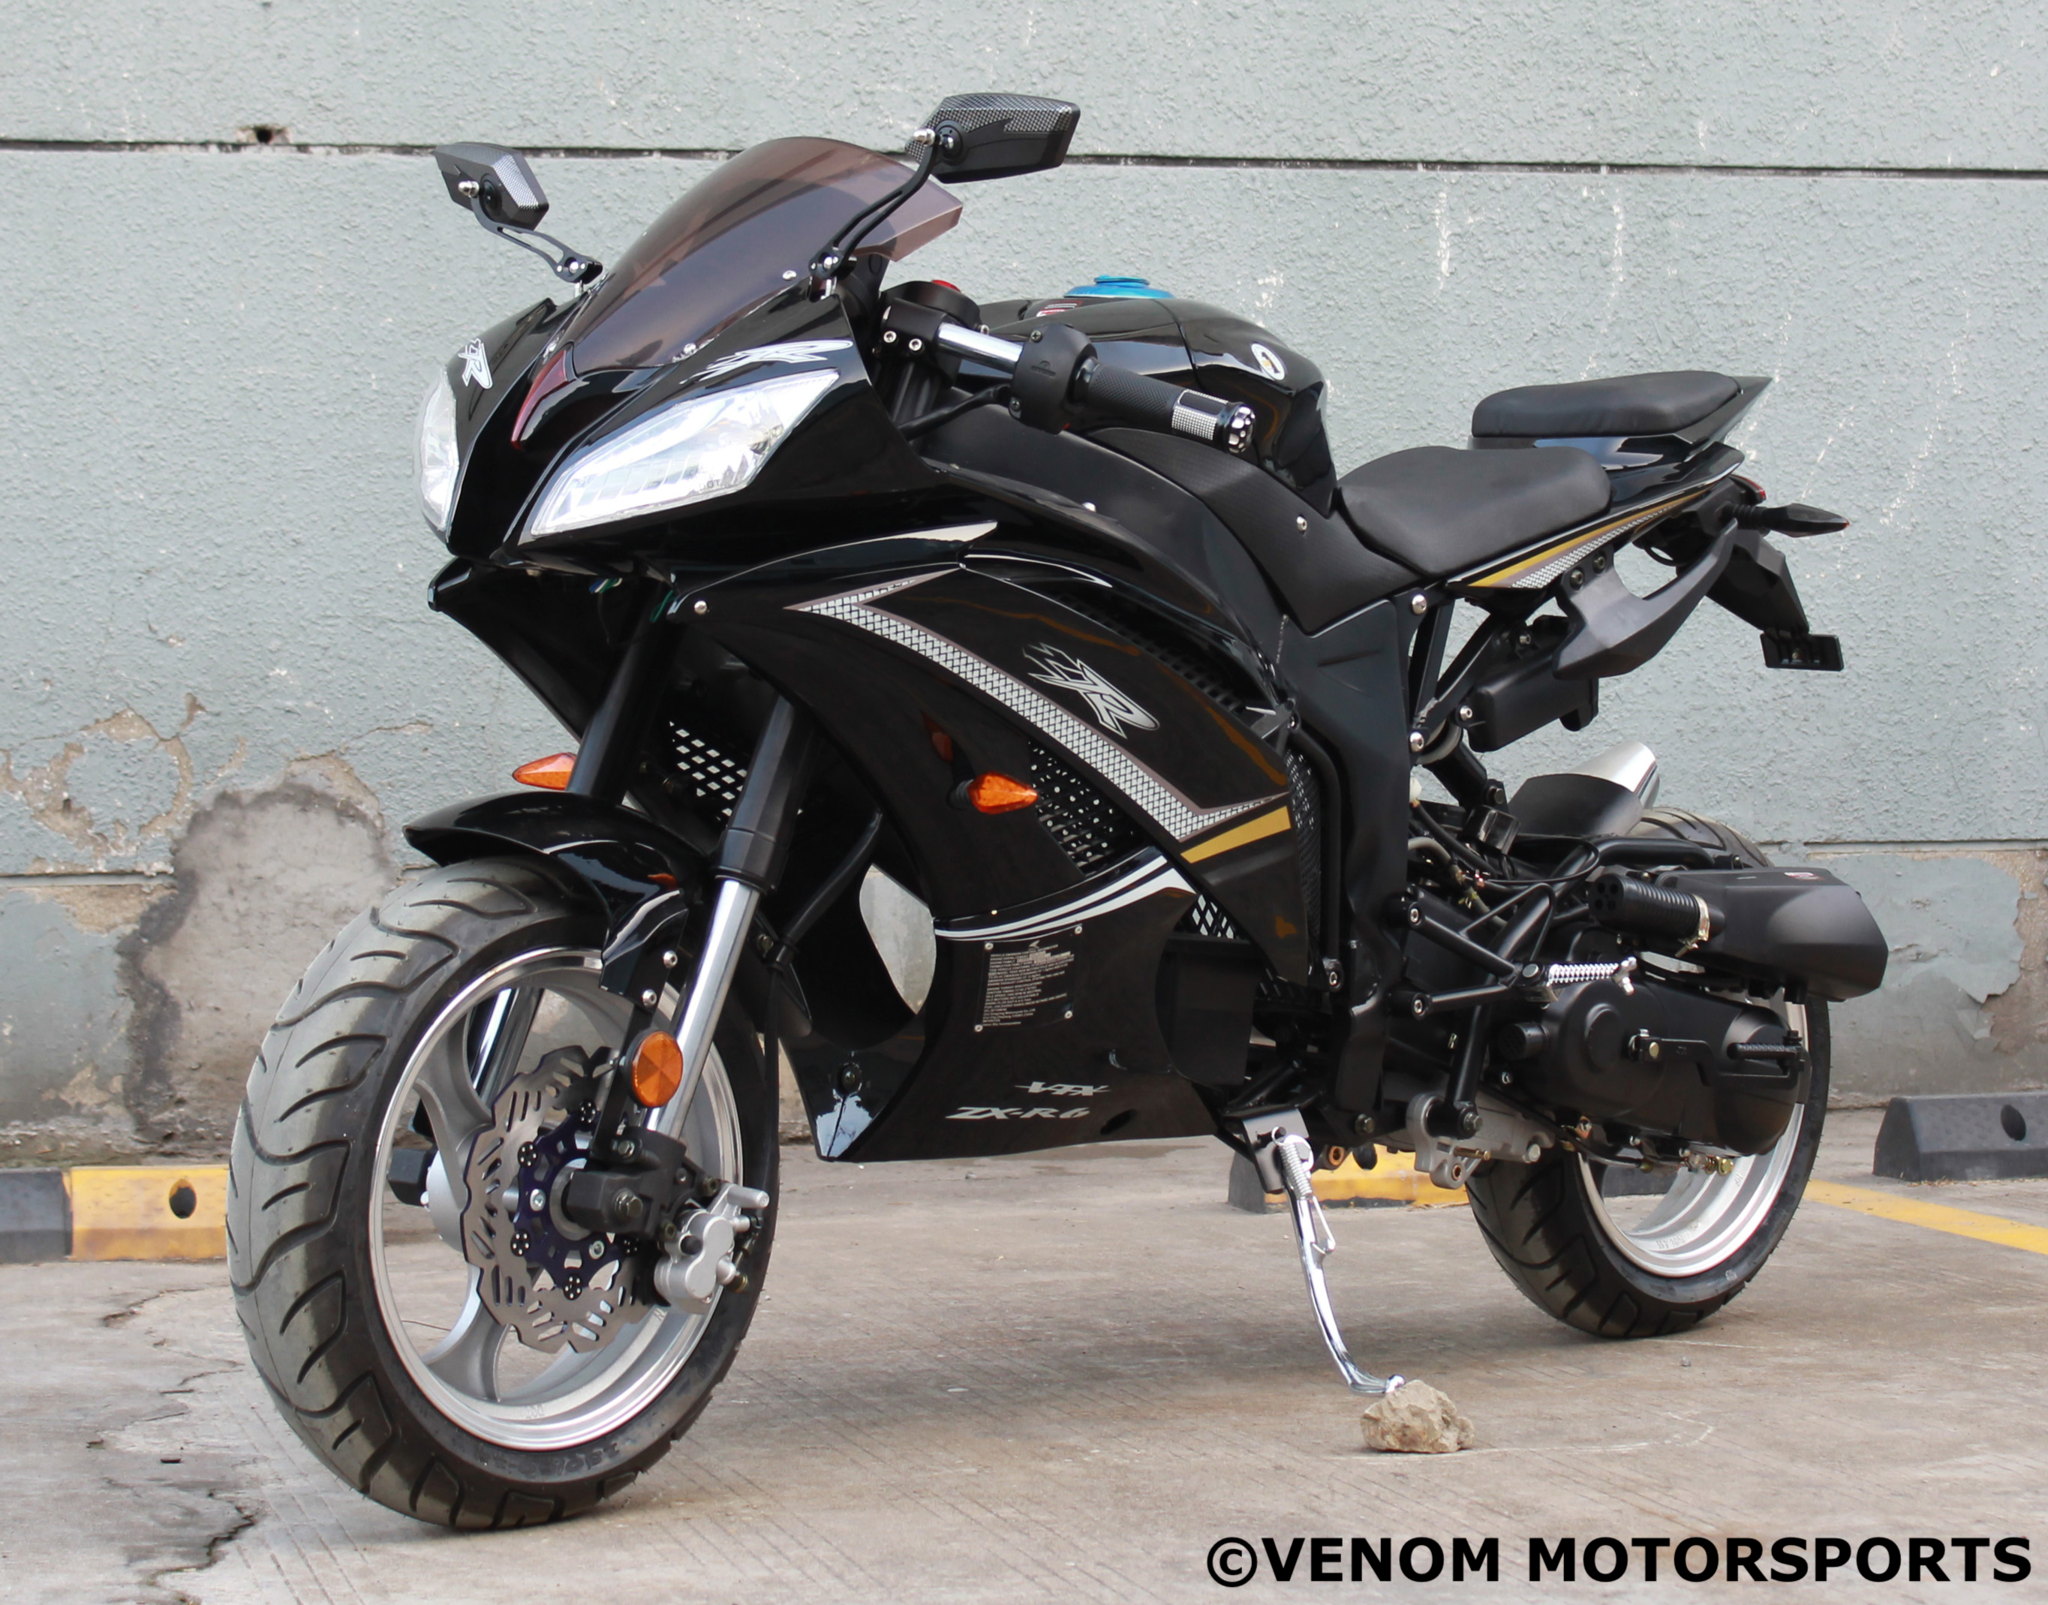 50cc Pocket Bike, Venom Motorsports Inc